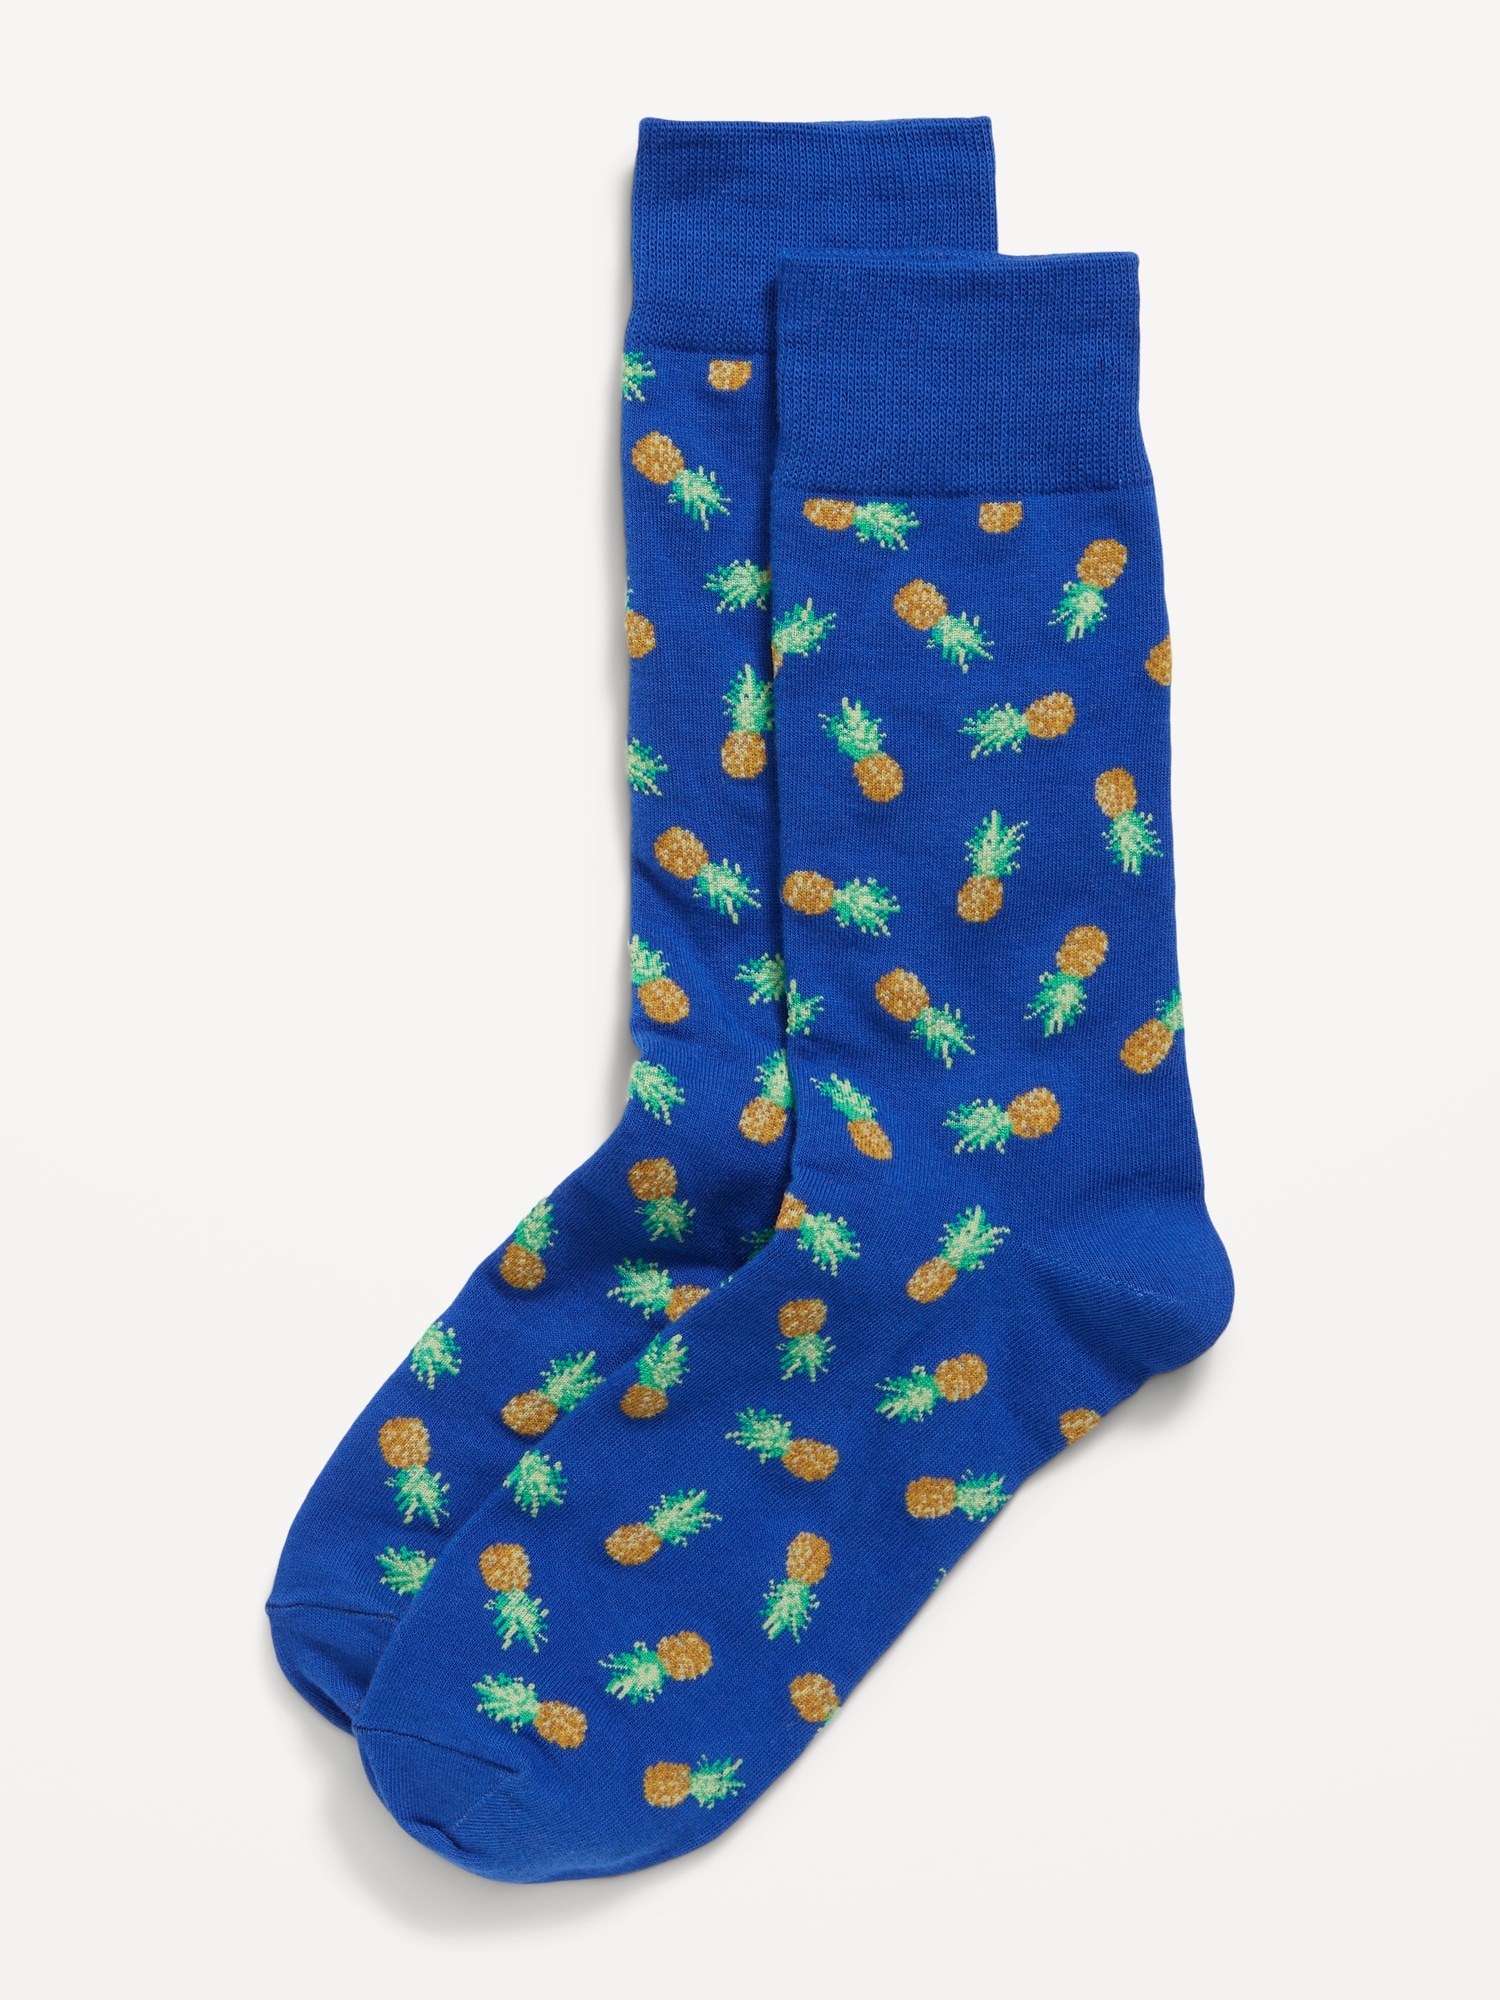 Printed Novelty Socks